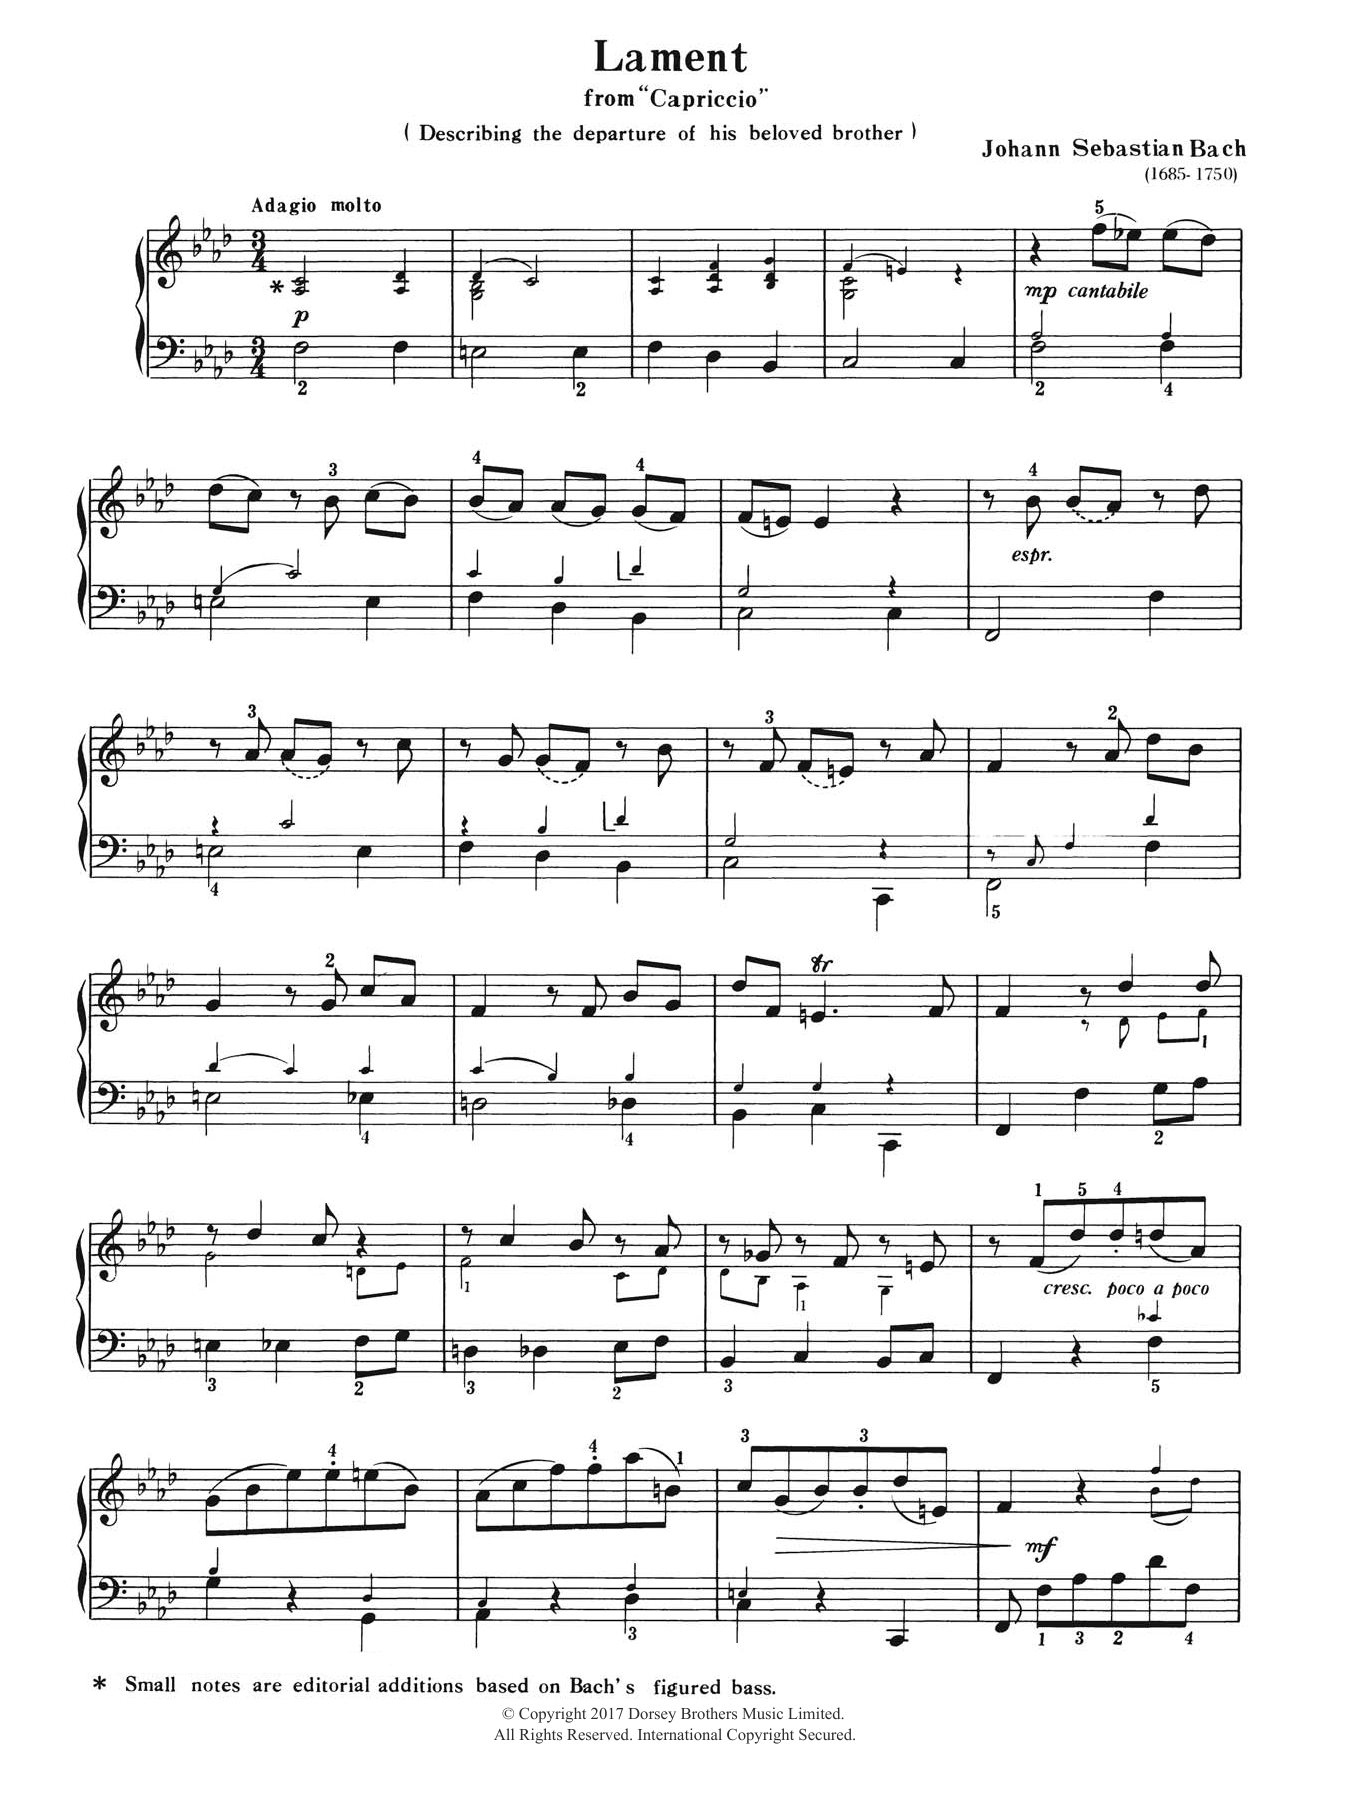 Johann Sebastian Bach Lament (from Capriccio) Sheet Music Notes & Chords for Piano - Download or Print PDF